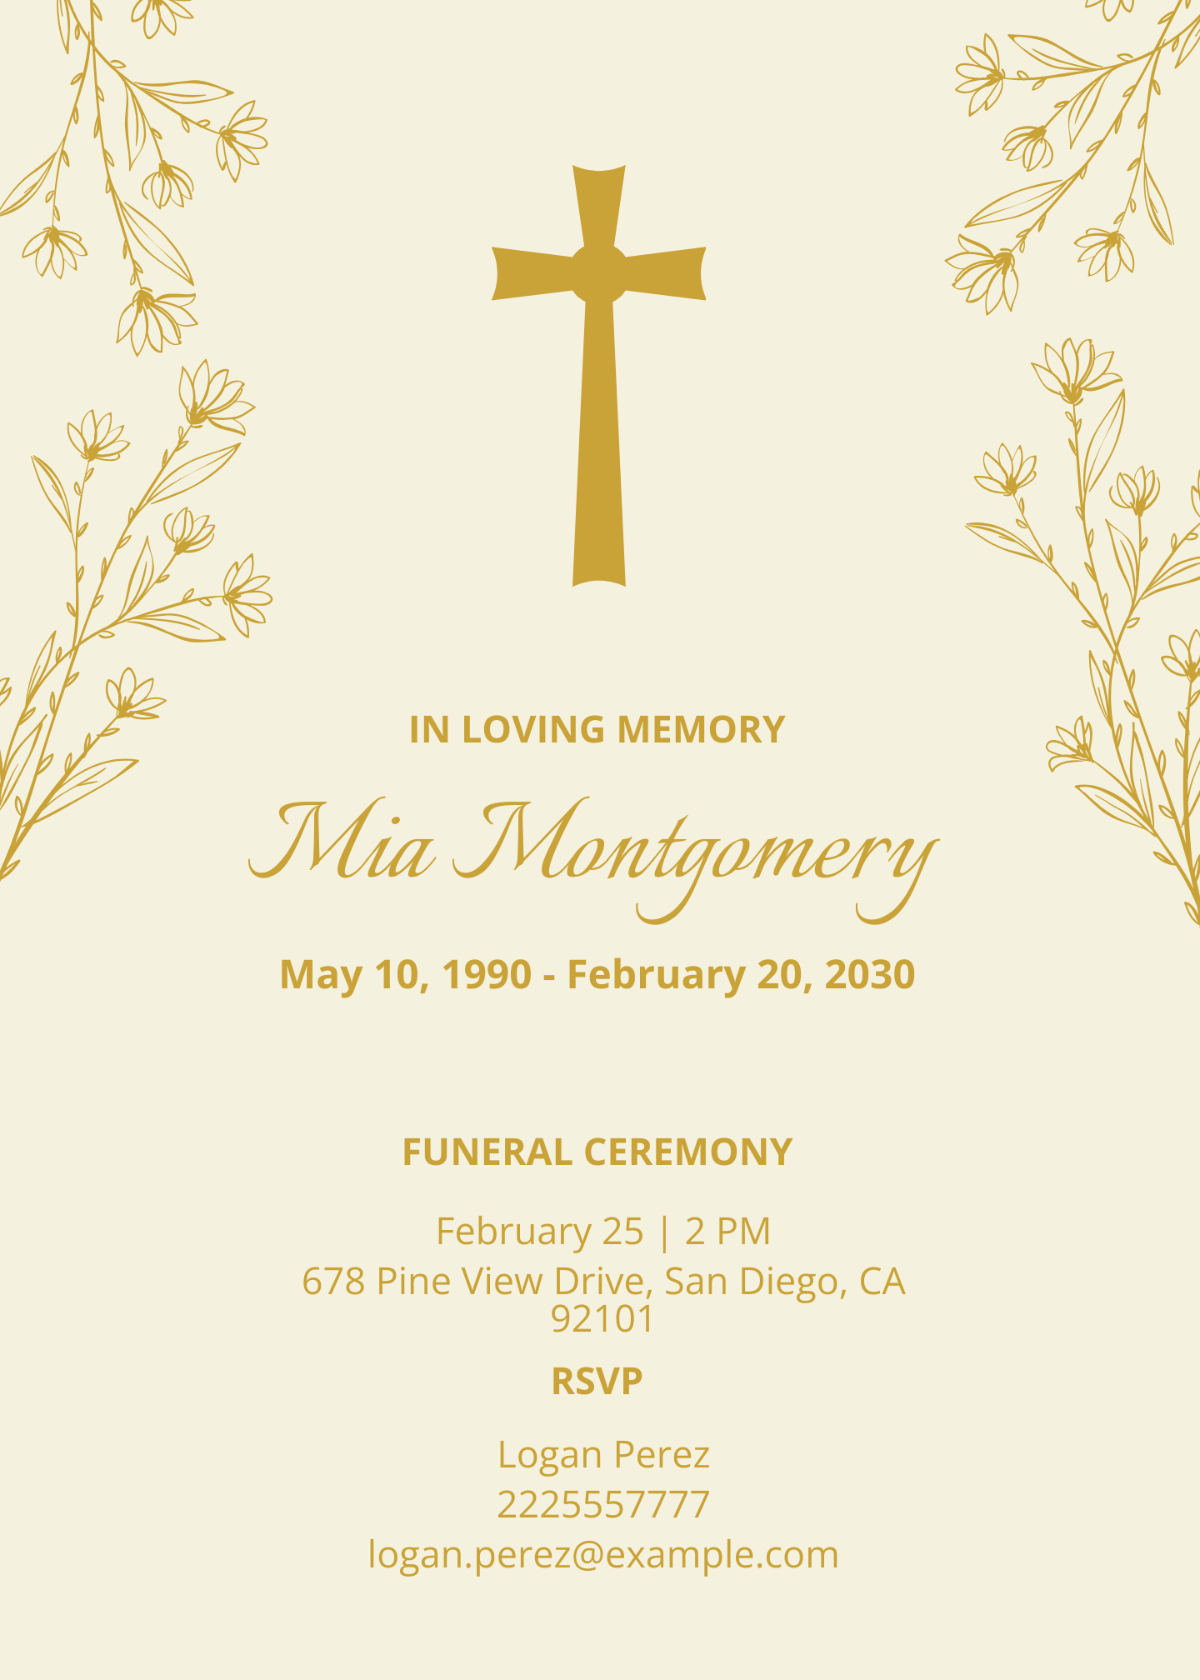 Sample Funeral Ceremony Invitation